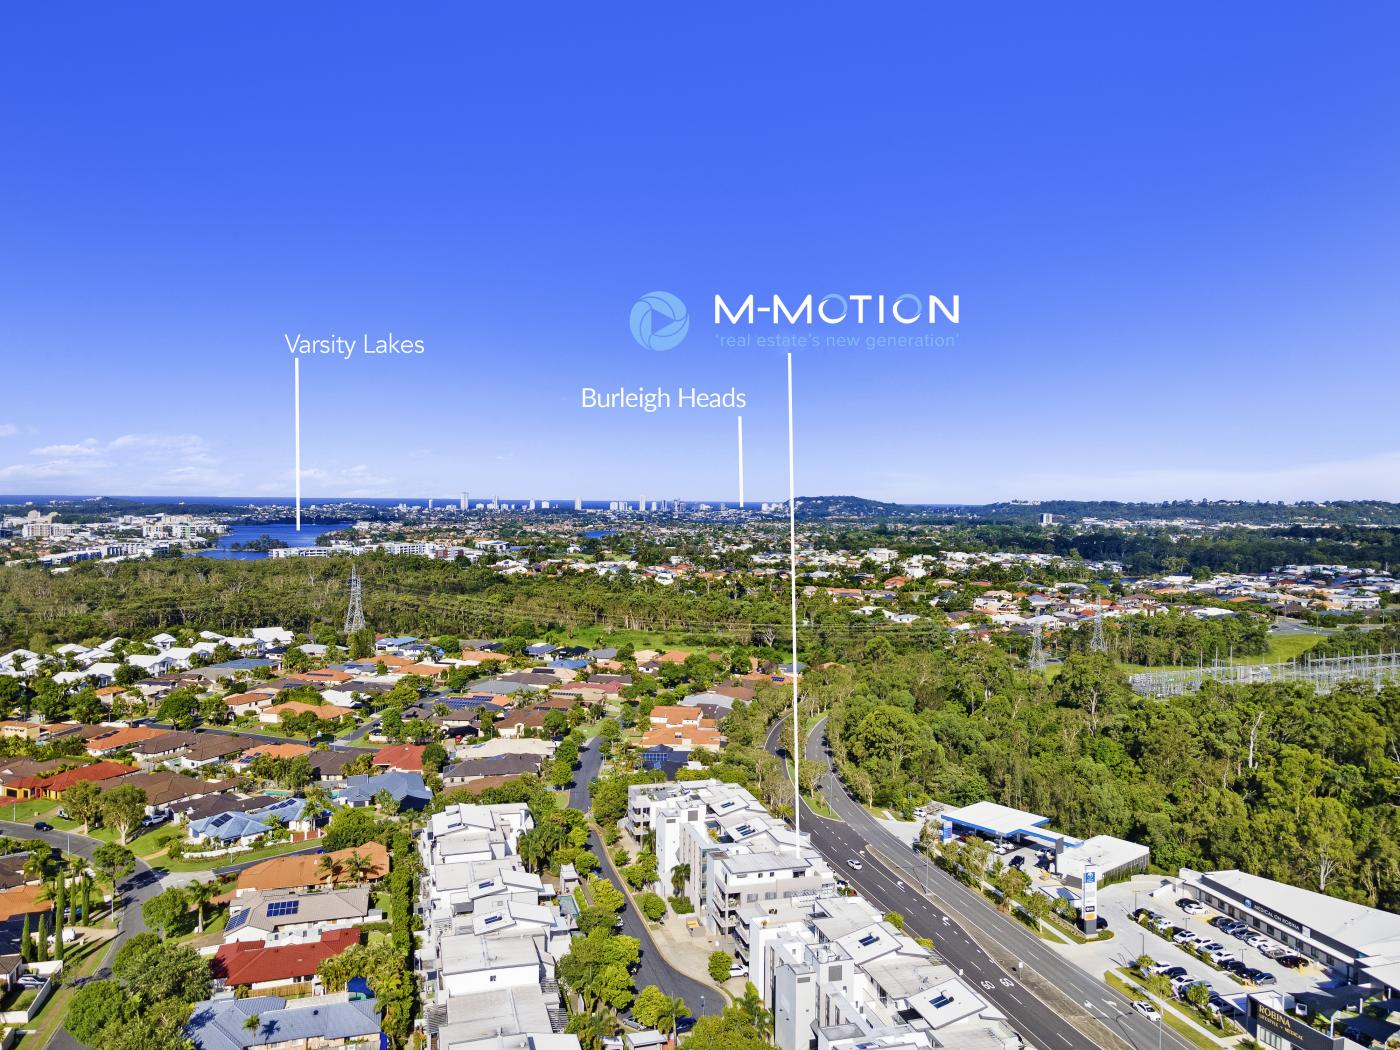 M-Motion Real Estate Agency, 54_2 Acacia Court, Robina Gold Coast, M-Motion Giselda Accinelli Best Property Manager Gold Coast